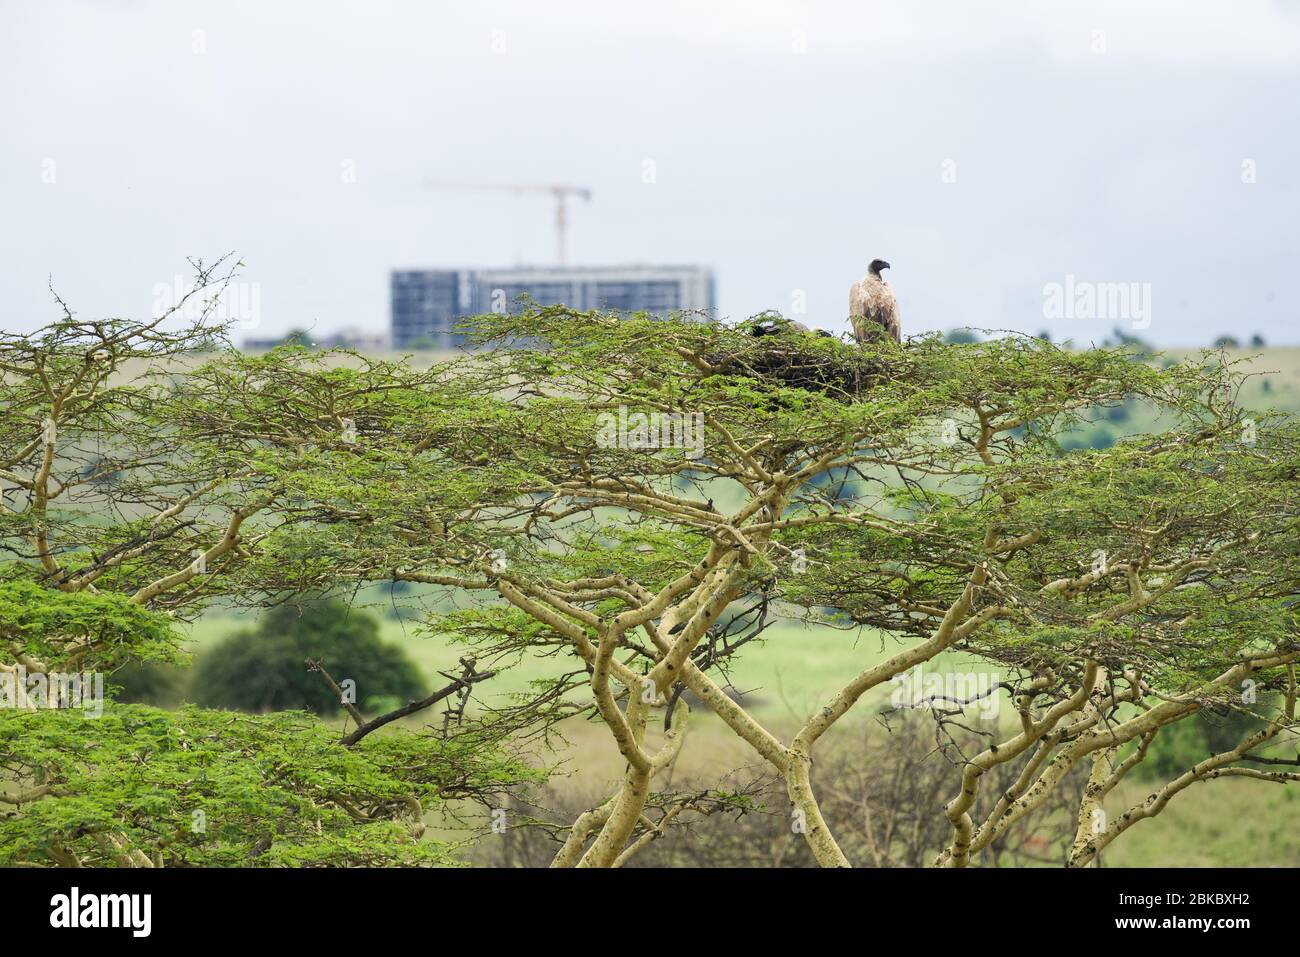 Avvoltoio bianco (Ghips africanus) da nido in Acacia albero con costruzione di edifici in background, Nairobi National Park, Kenya Foto Stock